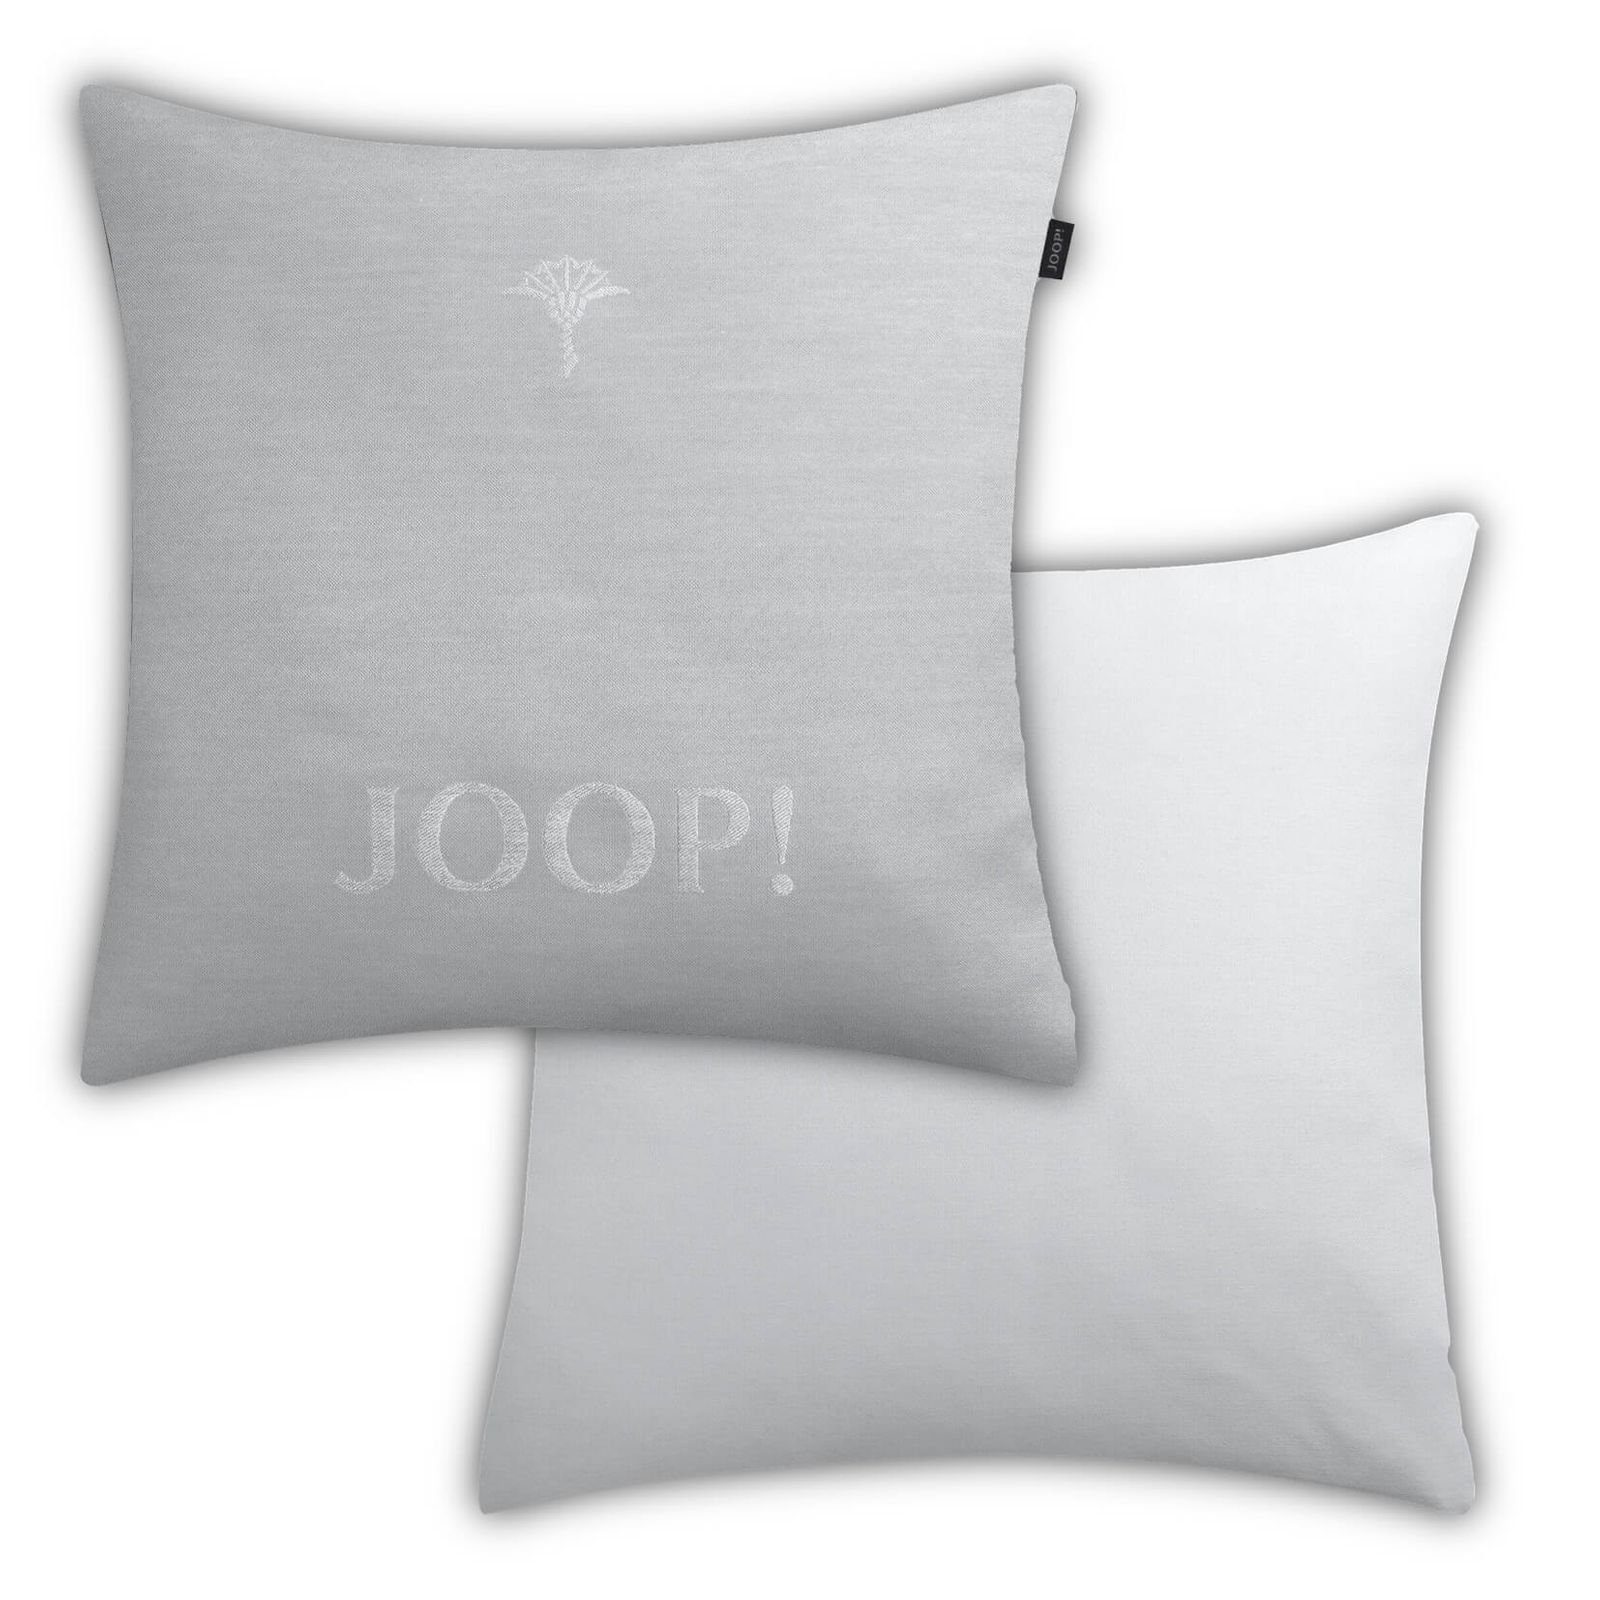 JOOP! Dekokissen Kissenhülle Chains 50852, Kornblumen-Prägung, JOOP!-Logo